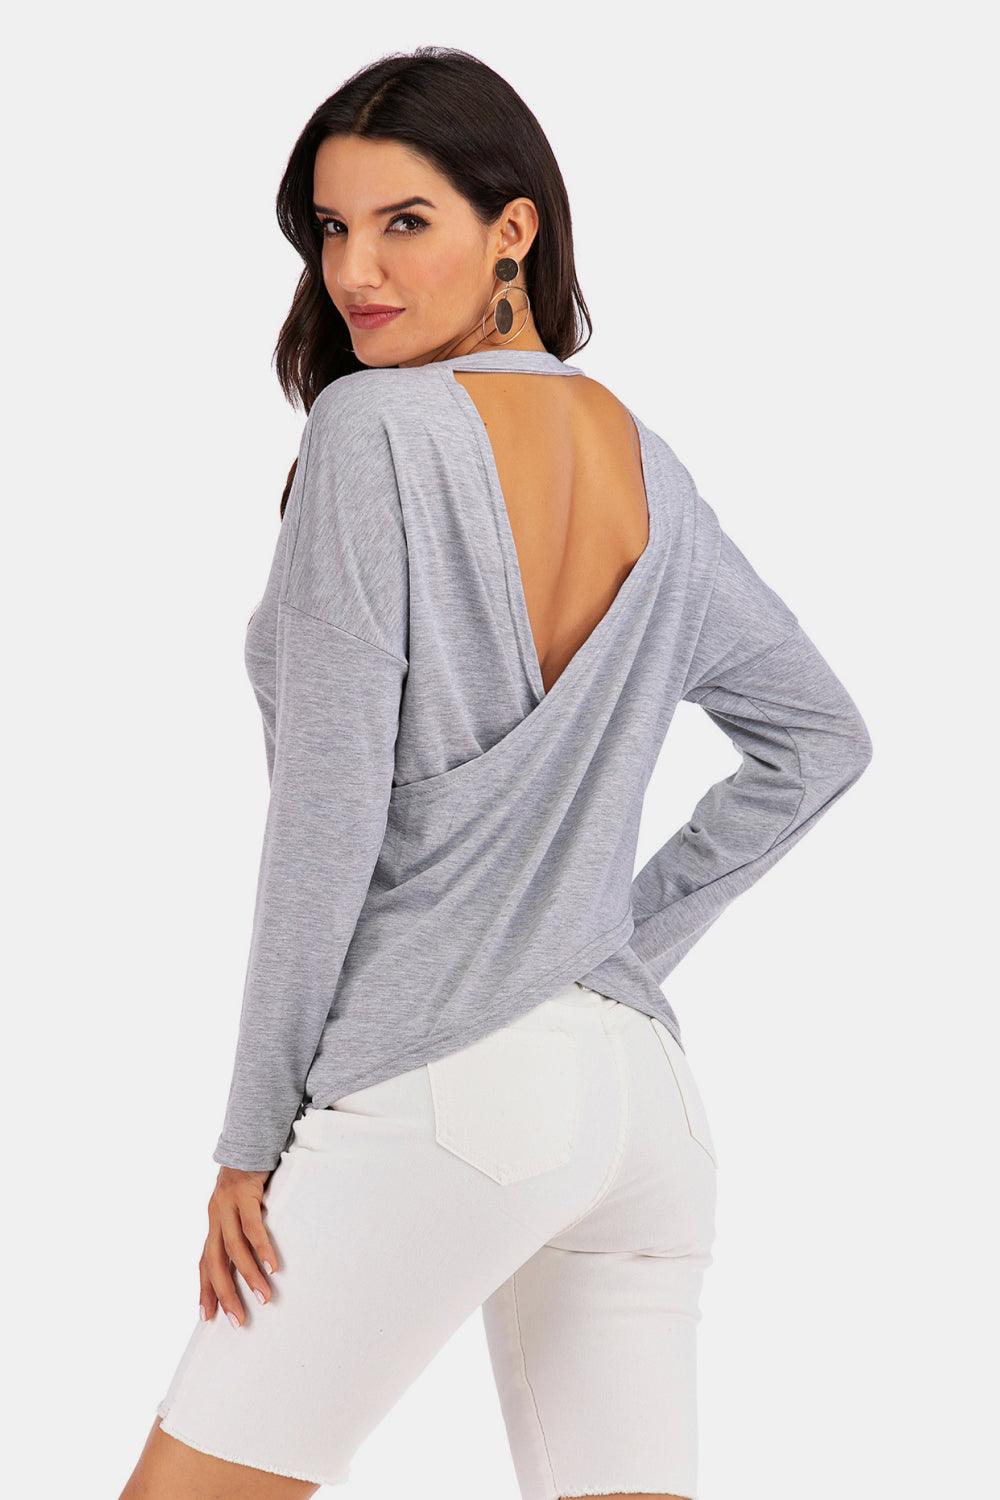 Cold-Shoulder Asymmetrical Neck Sweatshirt - Flyclothing LLC